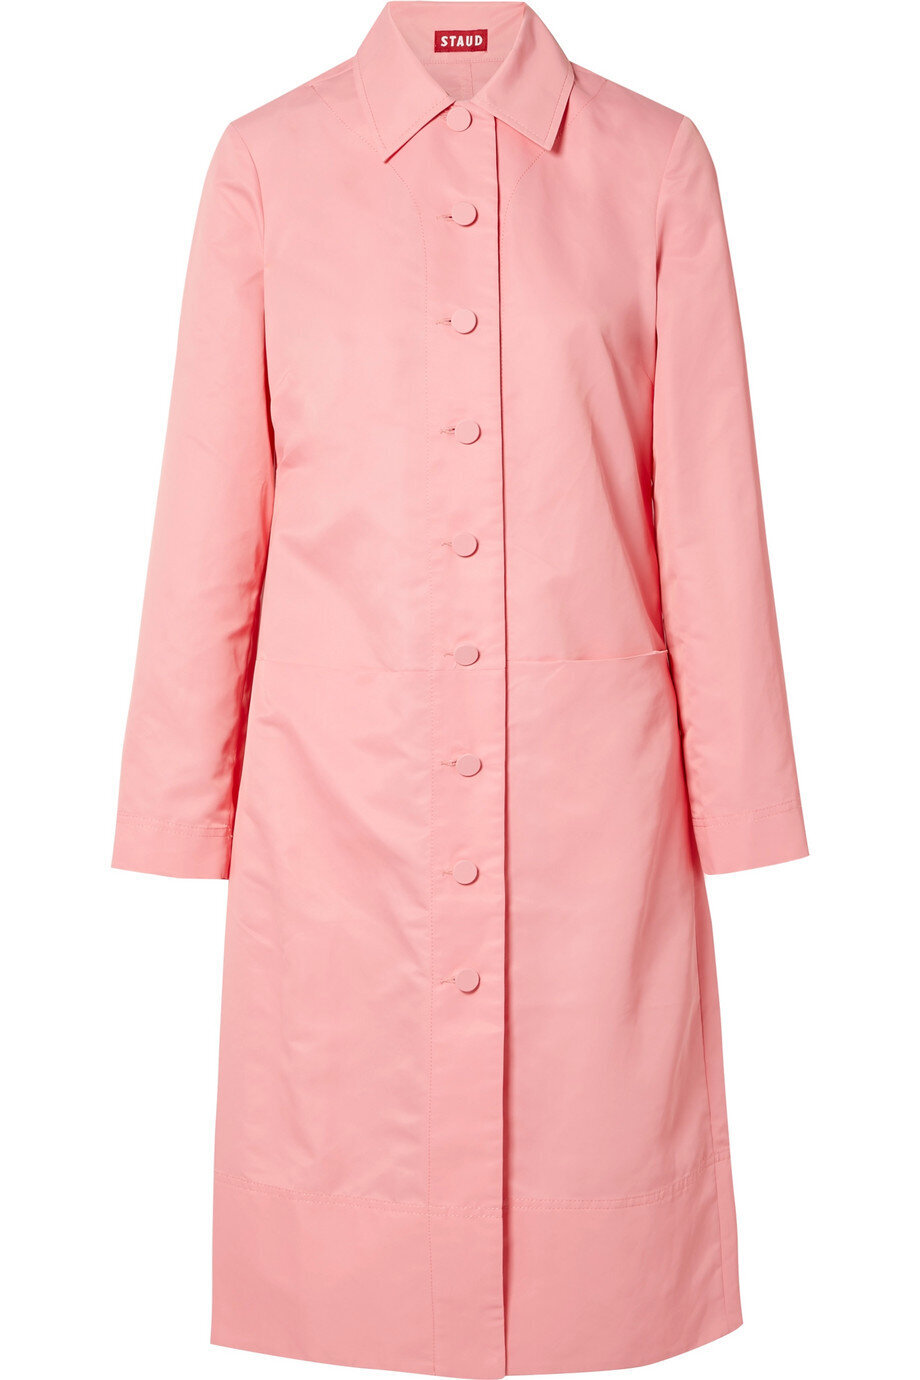 pink-coat.jpg